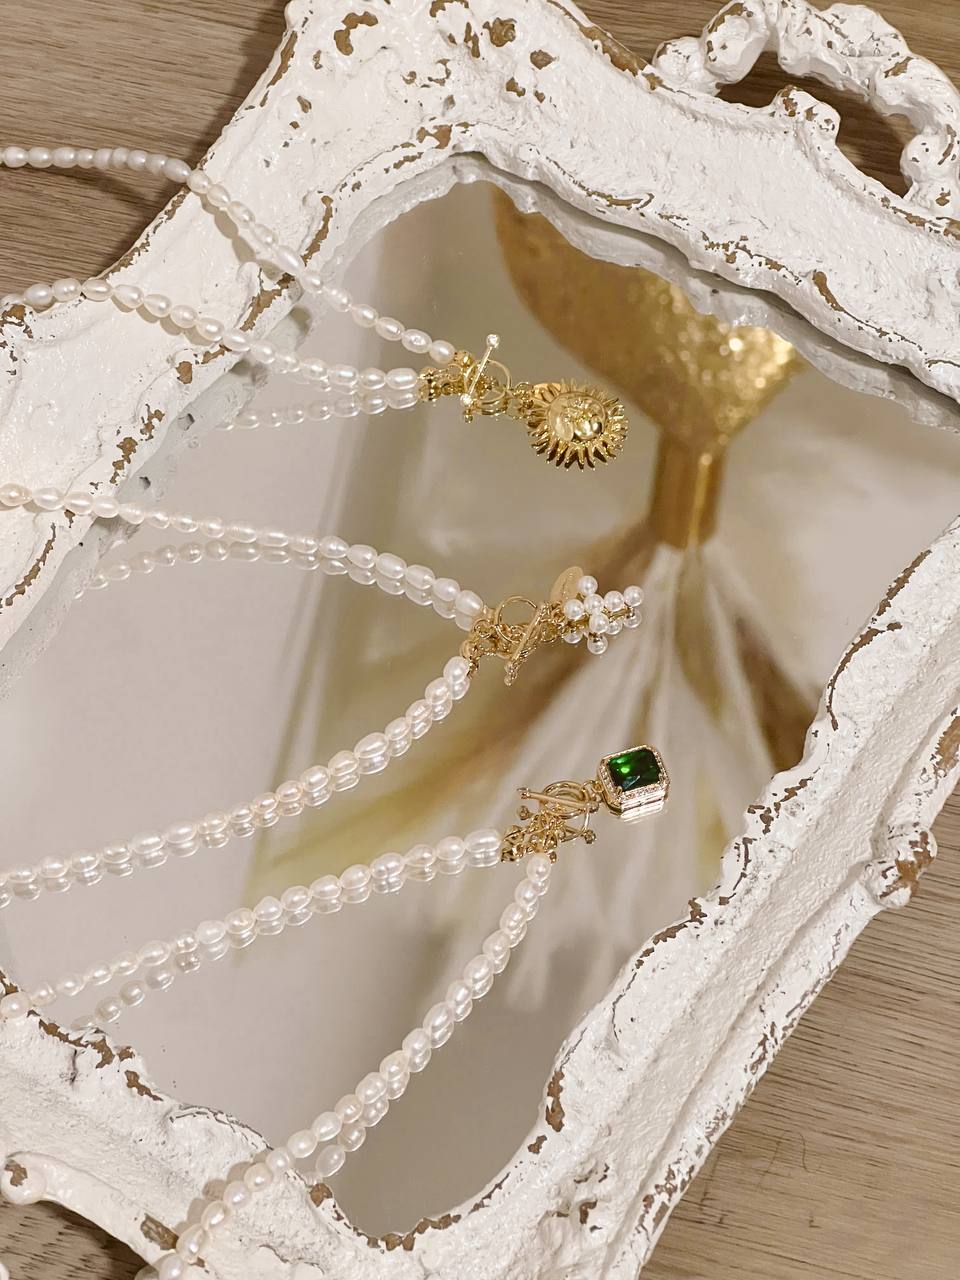 Pearl cross pendant necklace